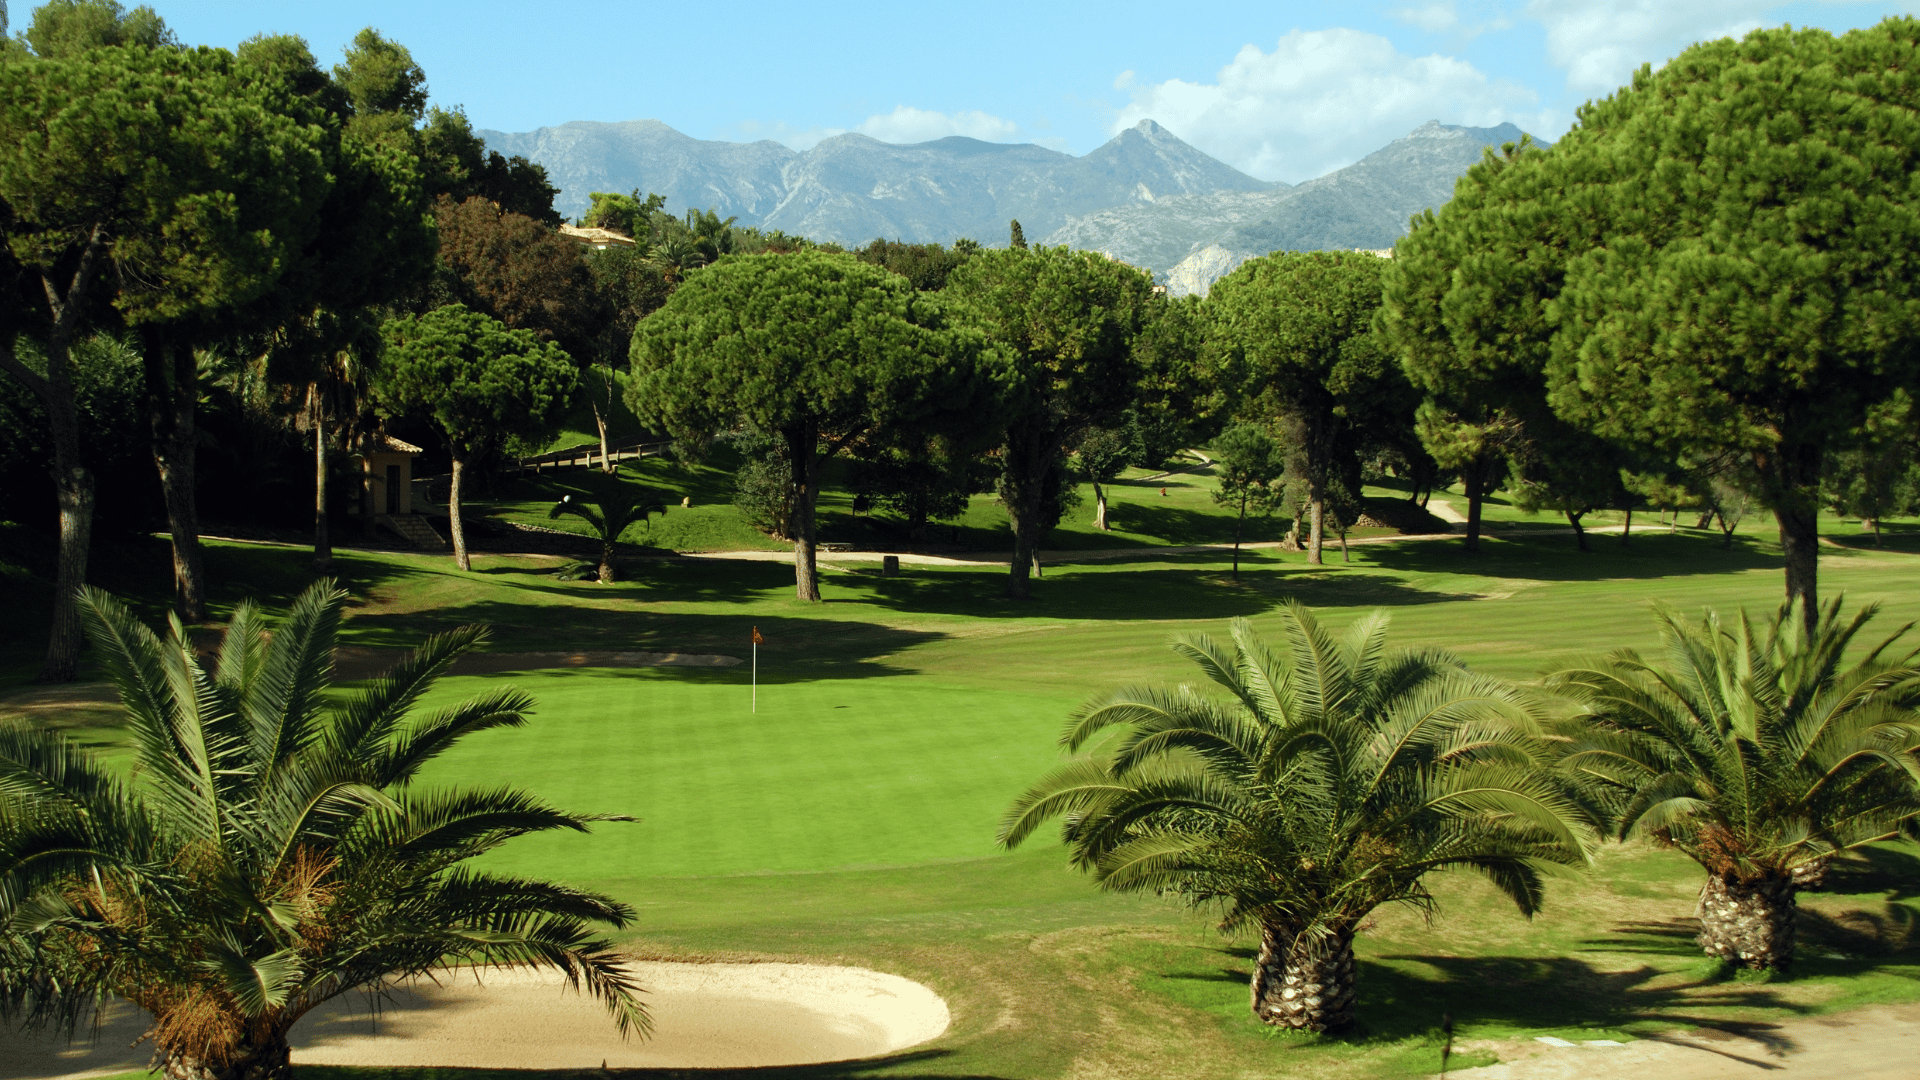 Marbella i pola golfowe